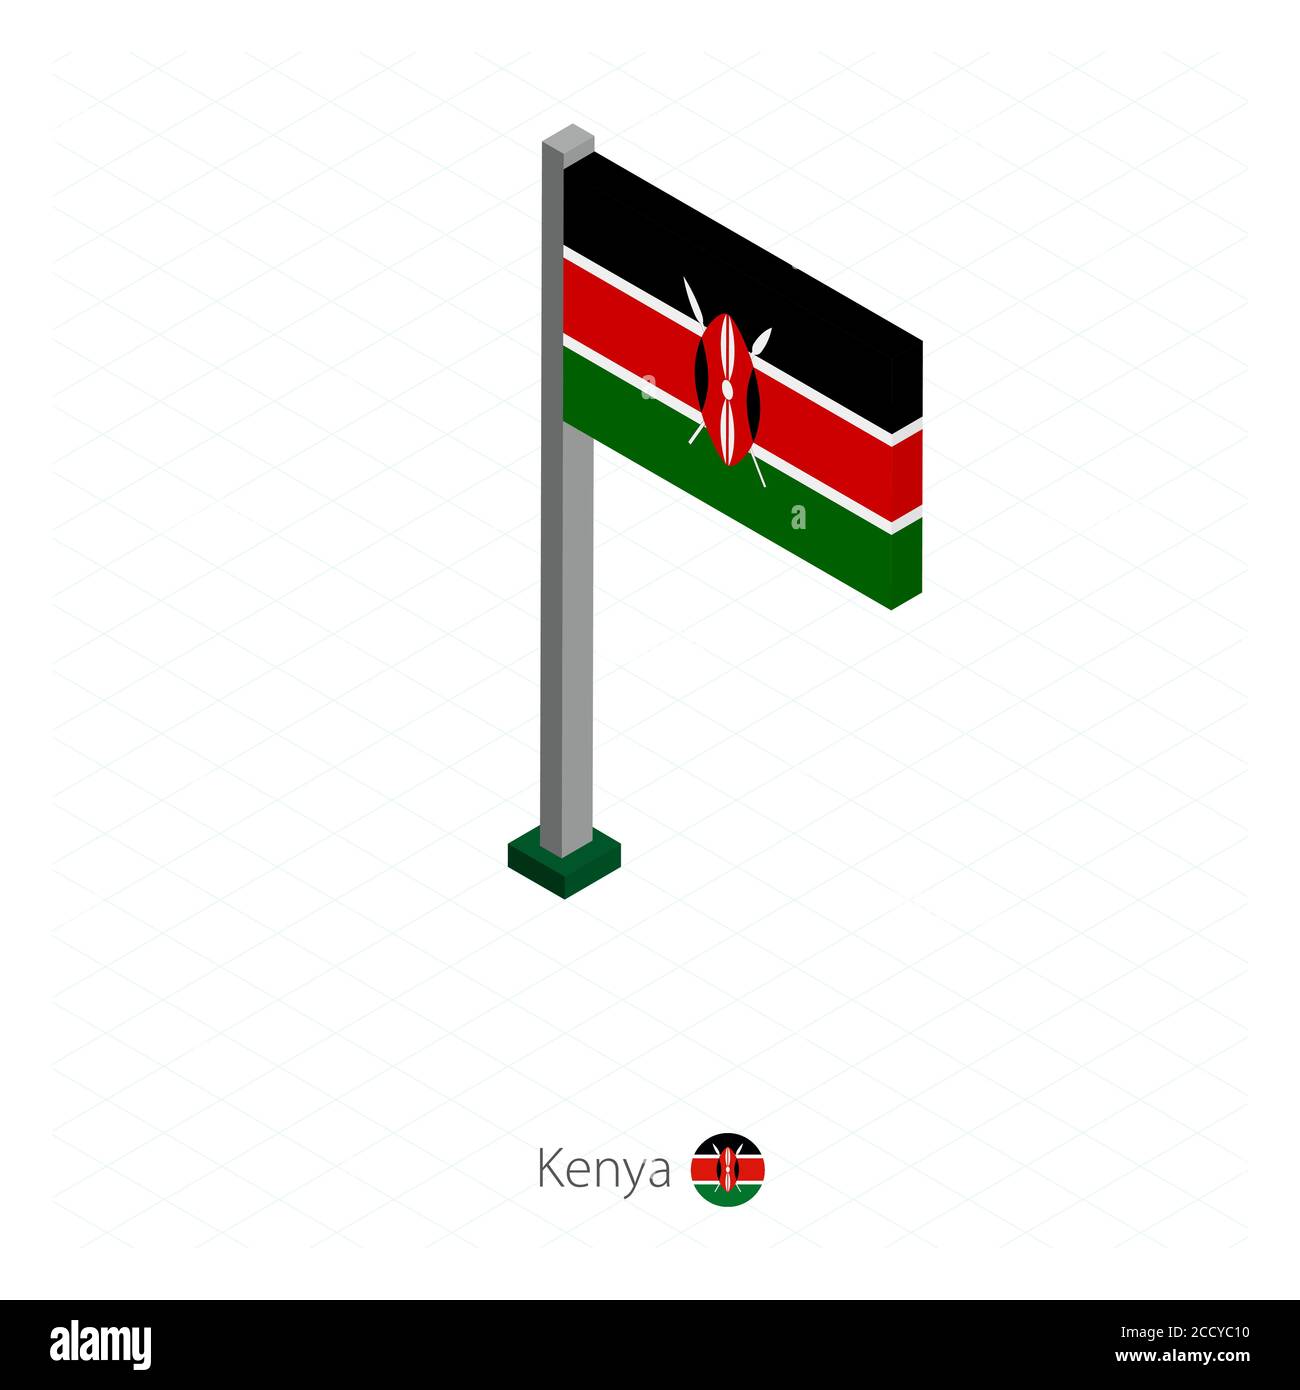 Kenya Flag on Flagpole in Isometric dimension. Isometric blue background. Vector illustration. Stock Vector